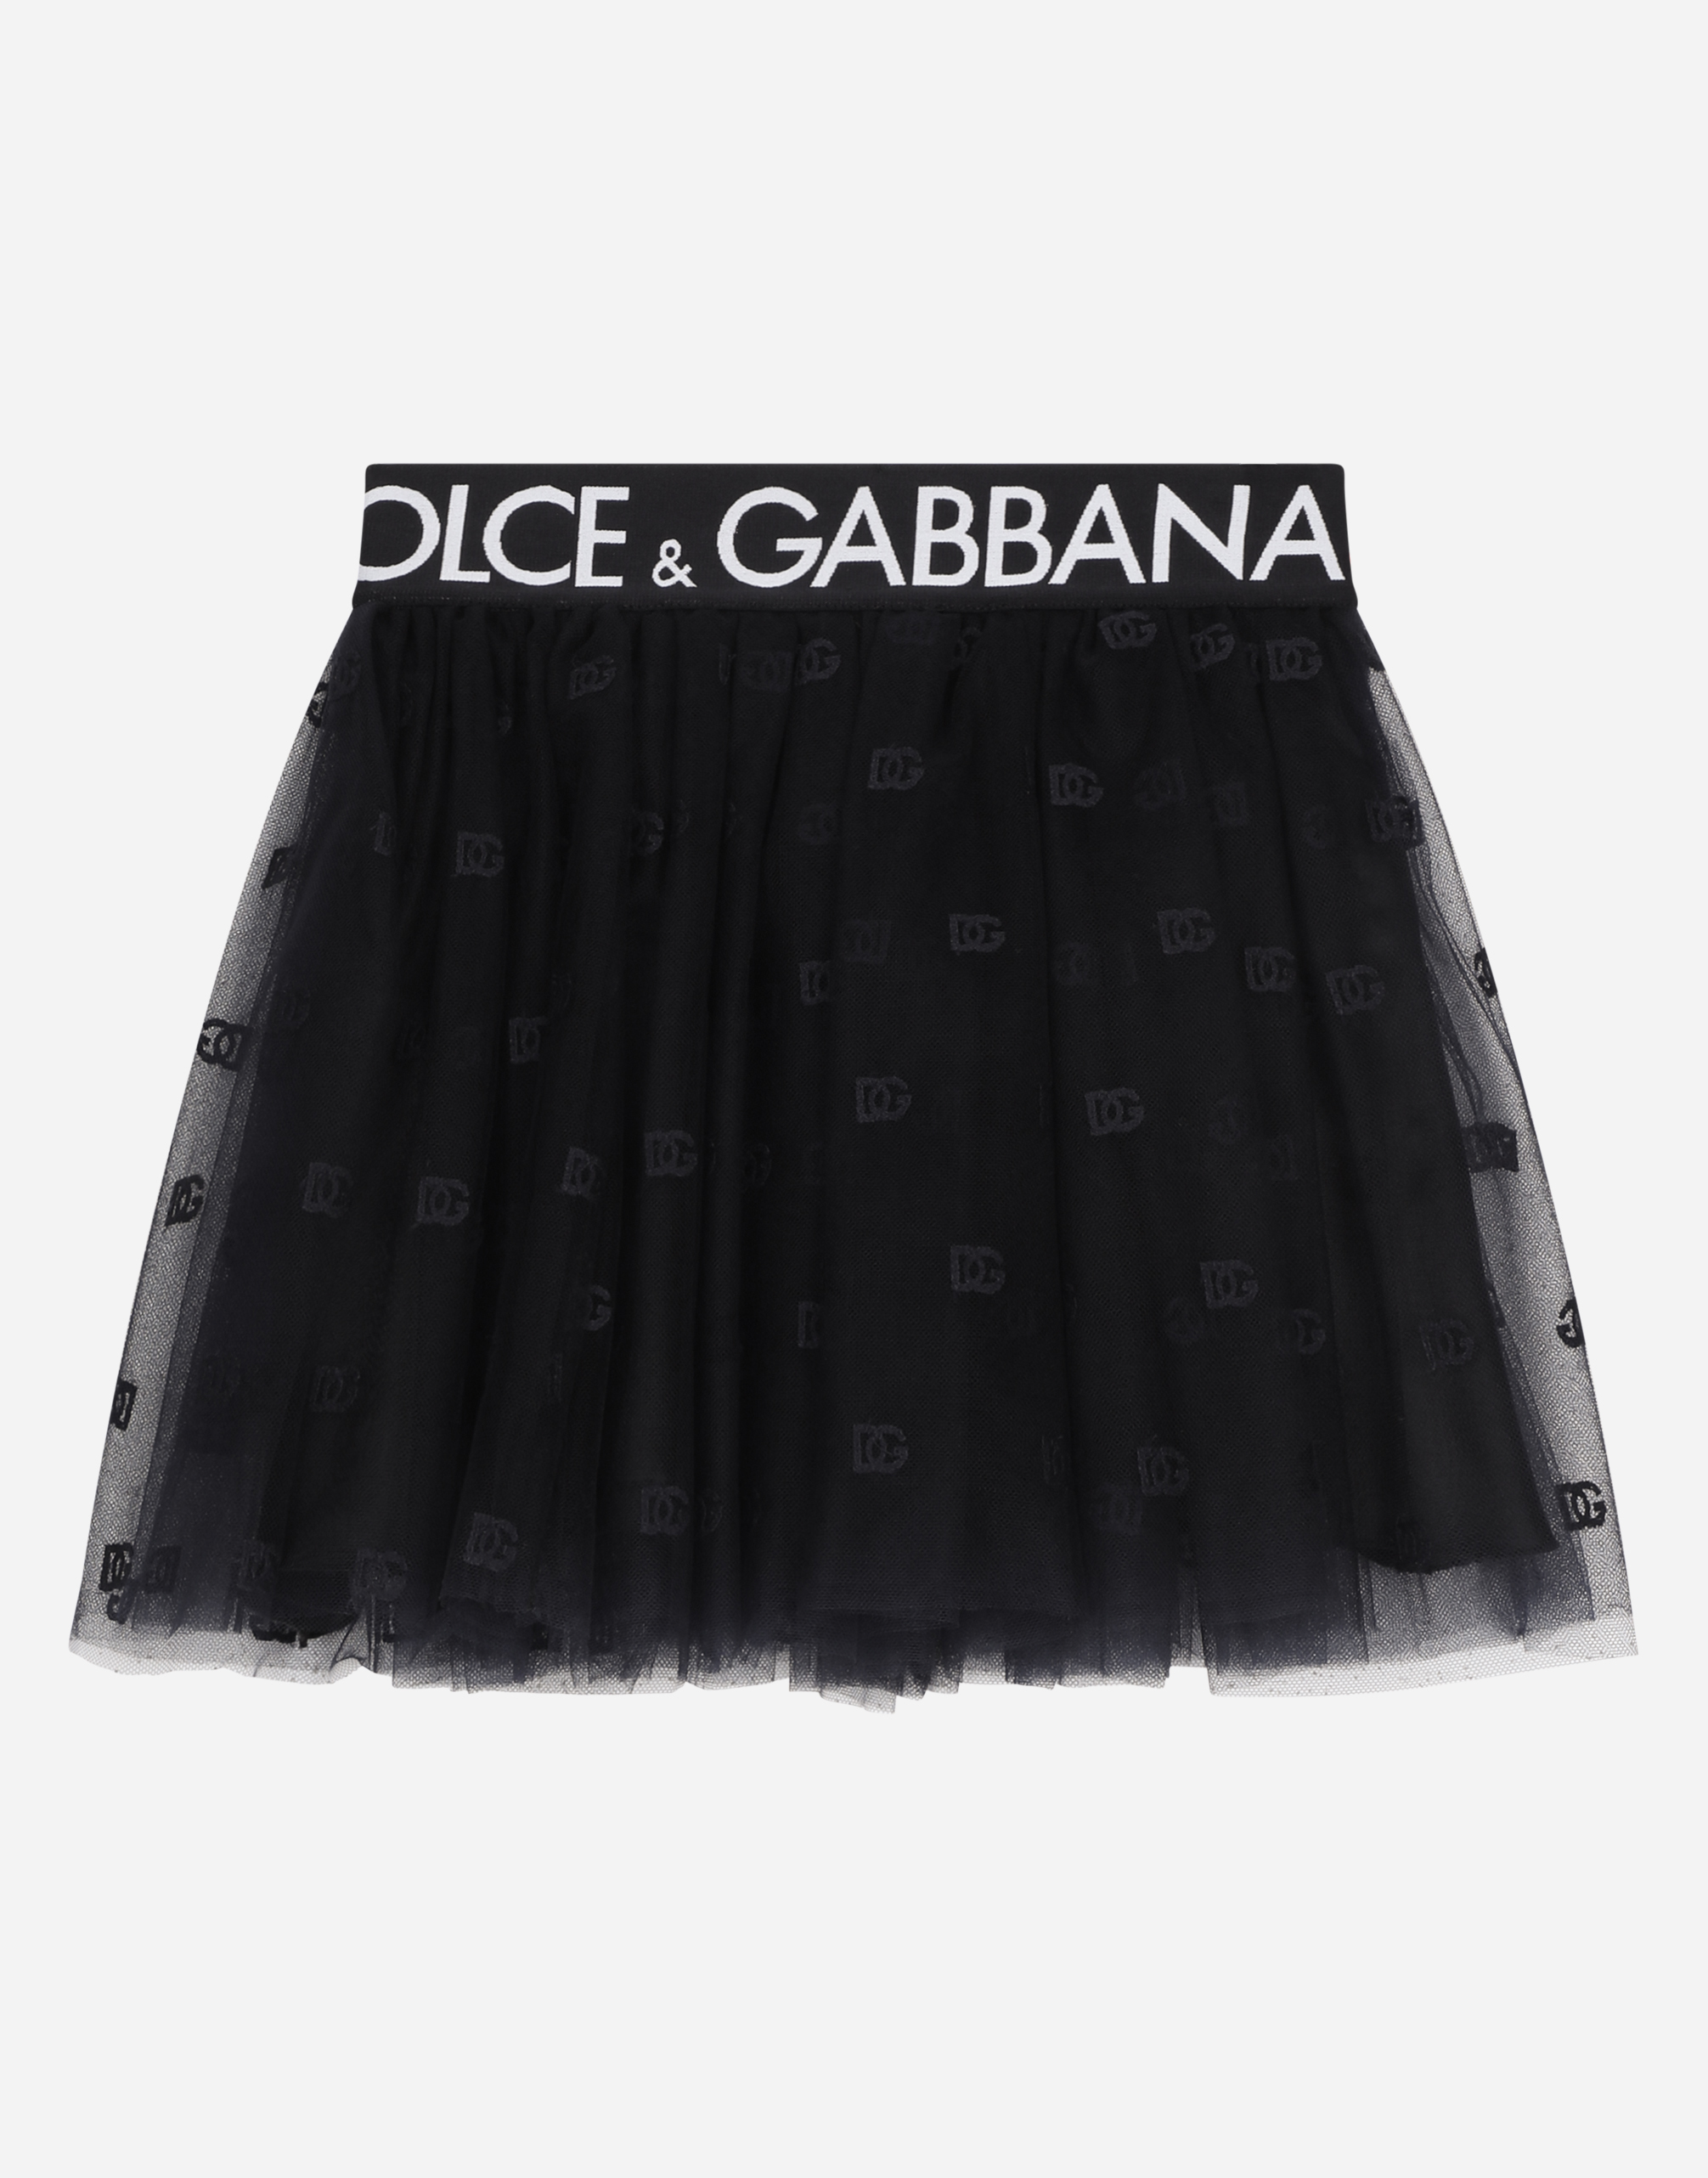 Multi-layered tulle miniskirt with branded elastic